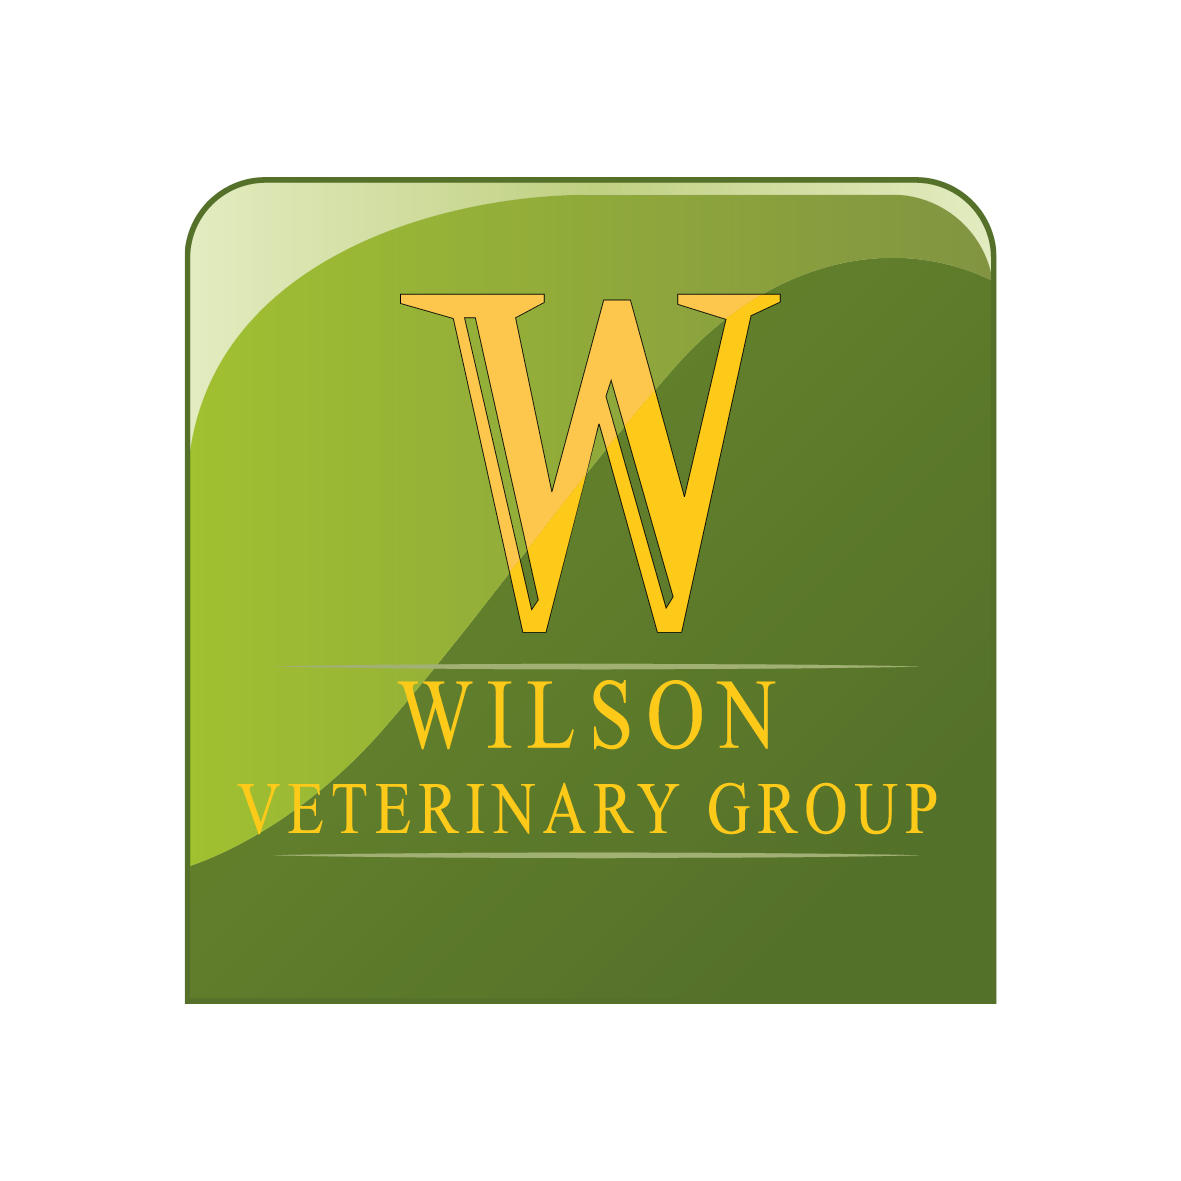 Wilson Veterinary Group, Bishop Auckland Logo